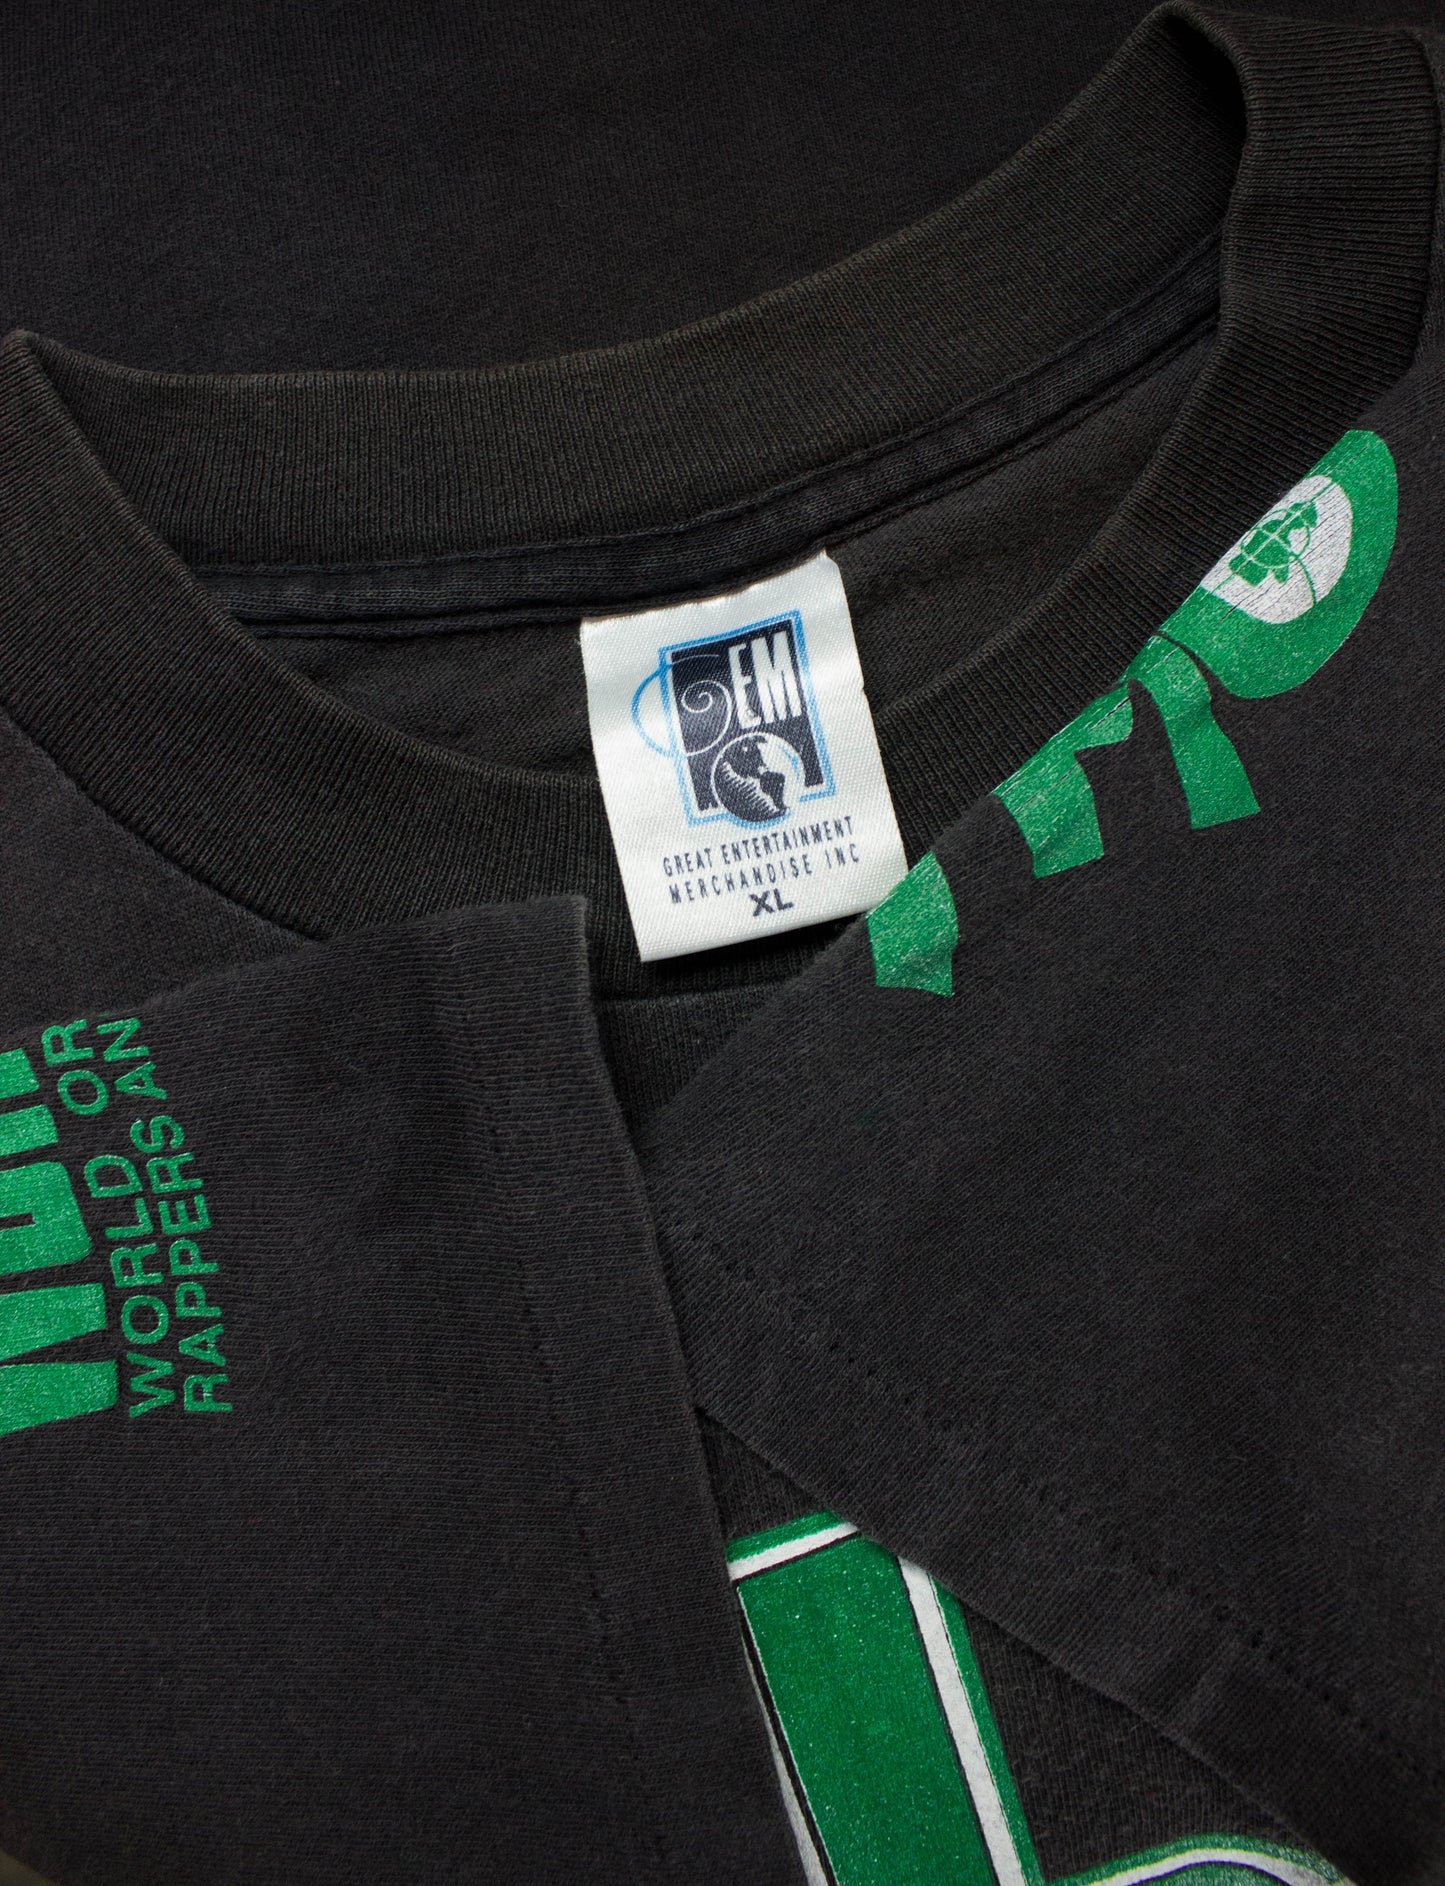 Public Enemy 1993 Crosshair Logos Black Rap Tee Concert T Shirt Unisex XL